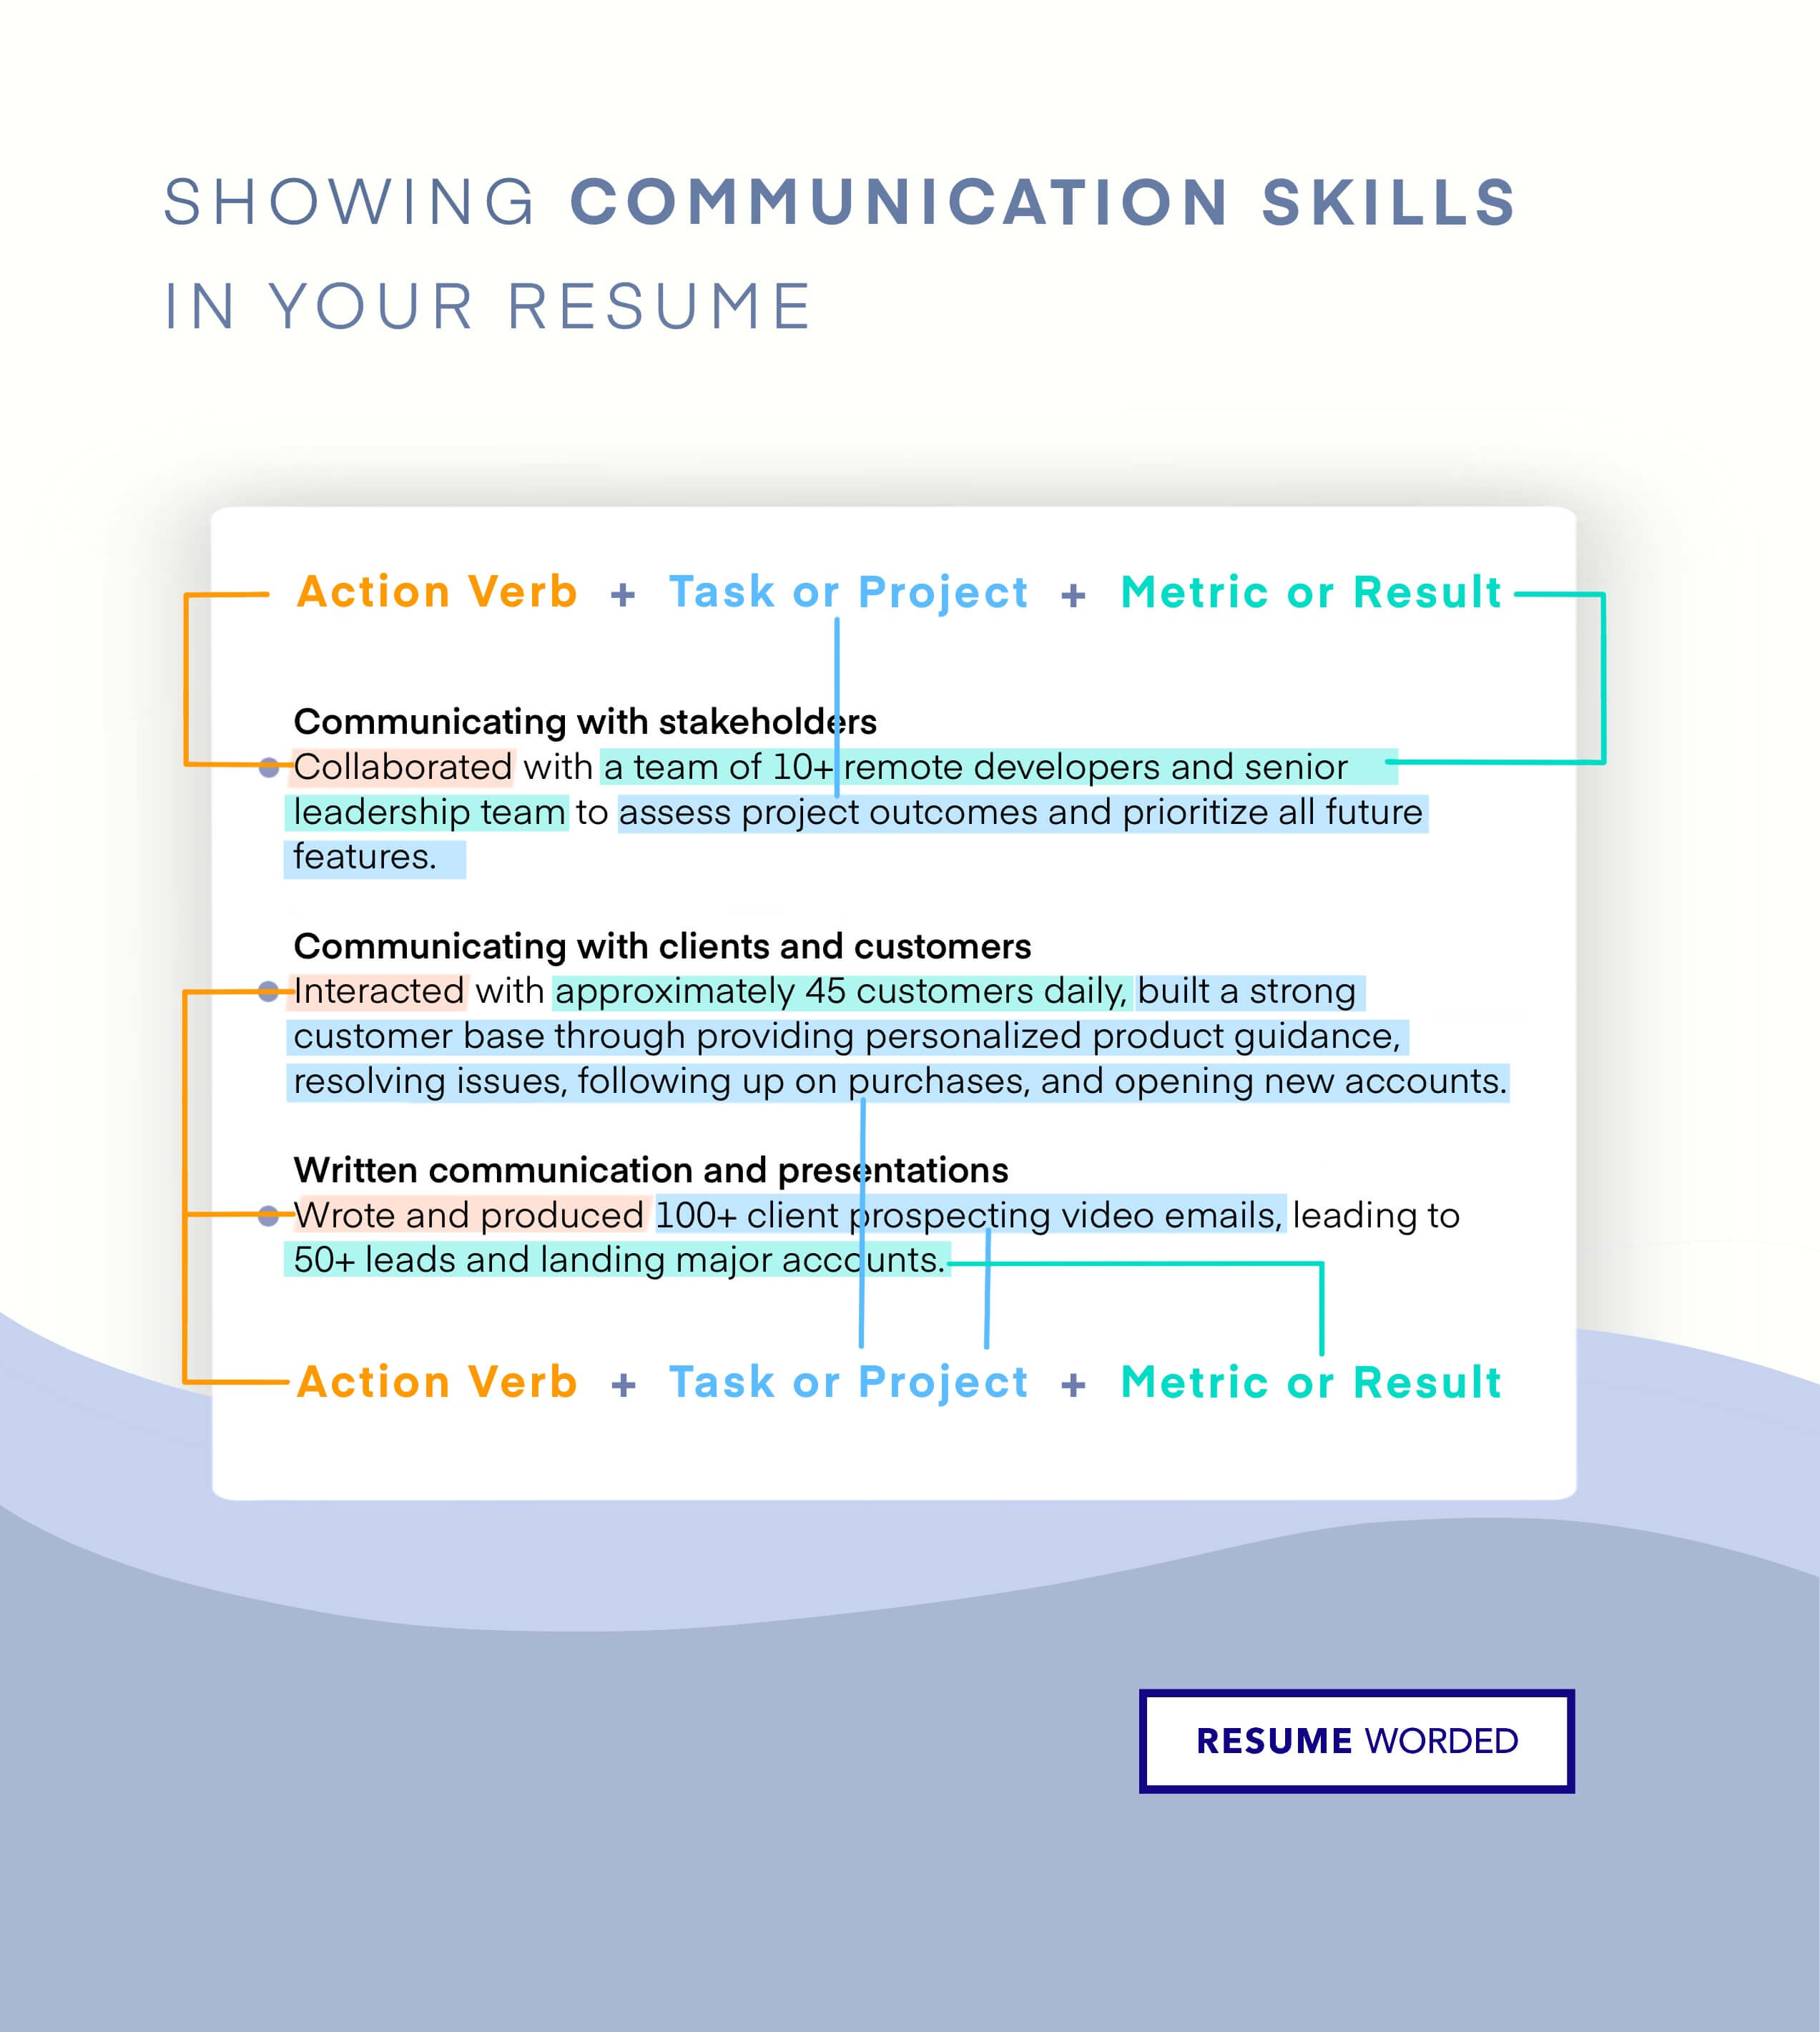 Highlight your communication and leadership skills - Entry-Level Program Manager CV